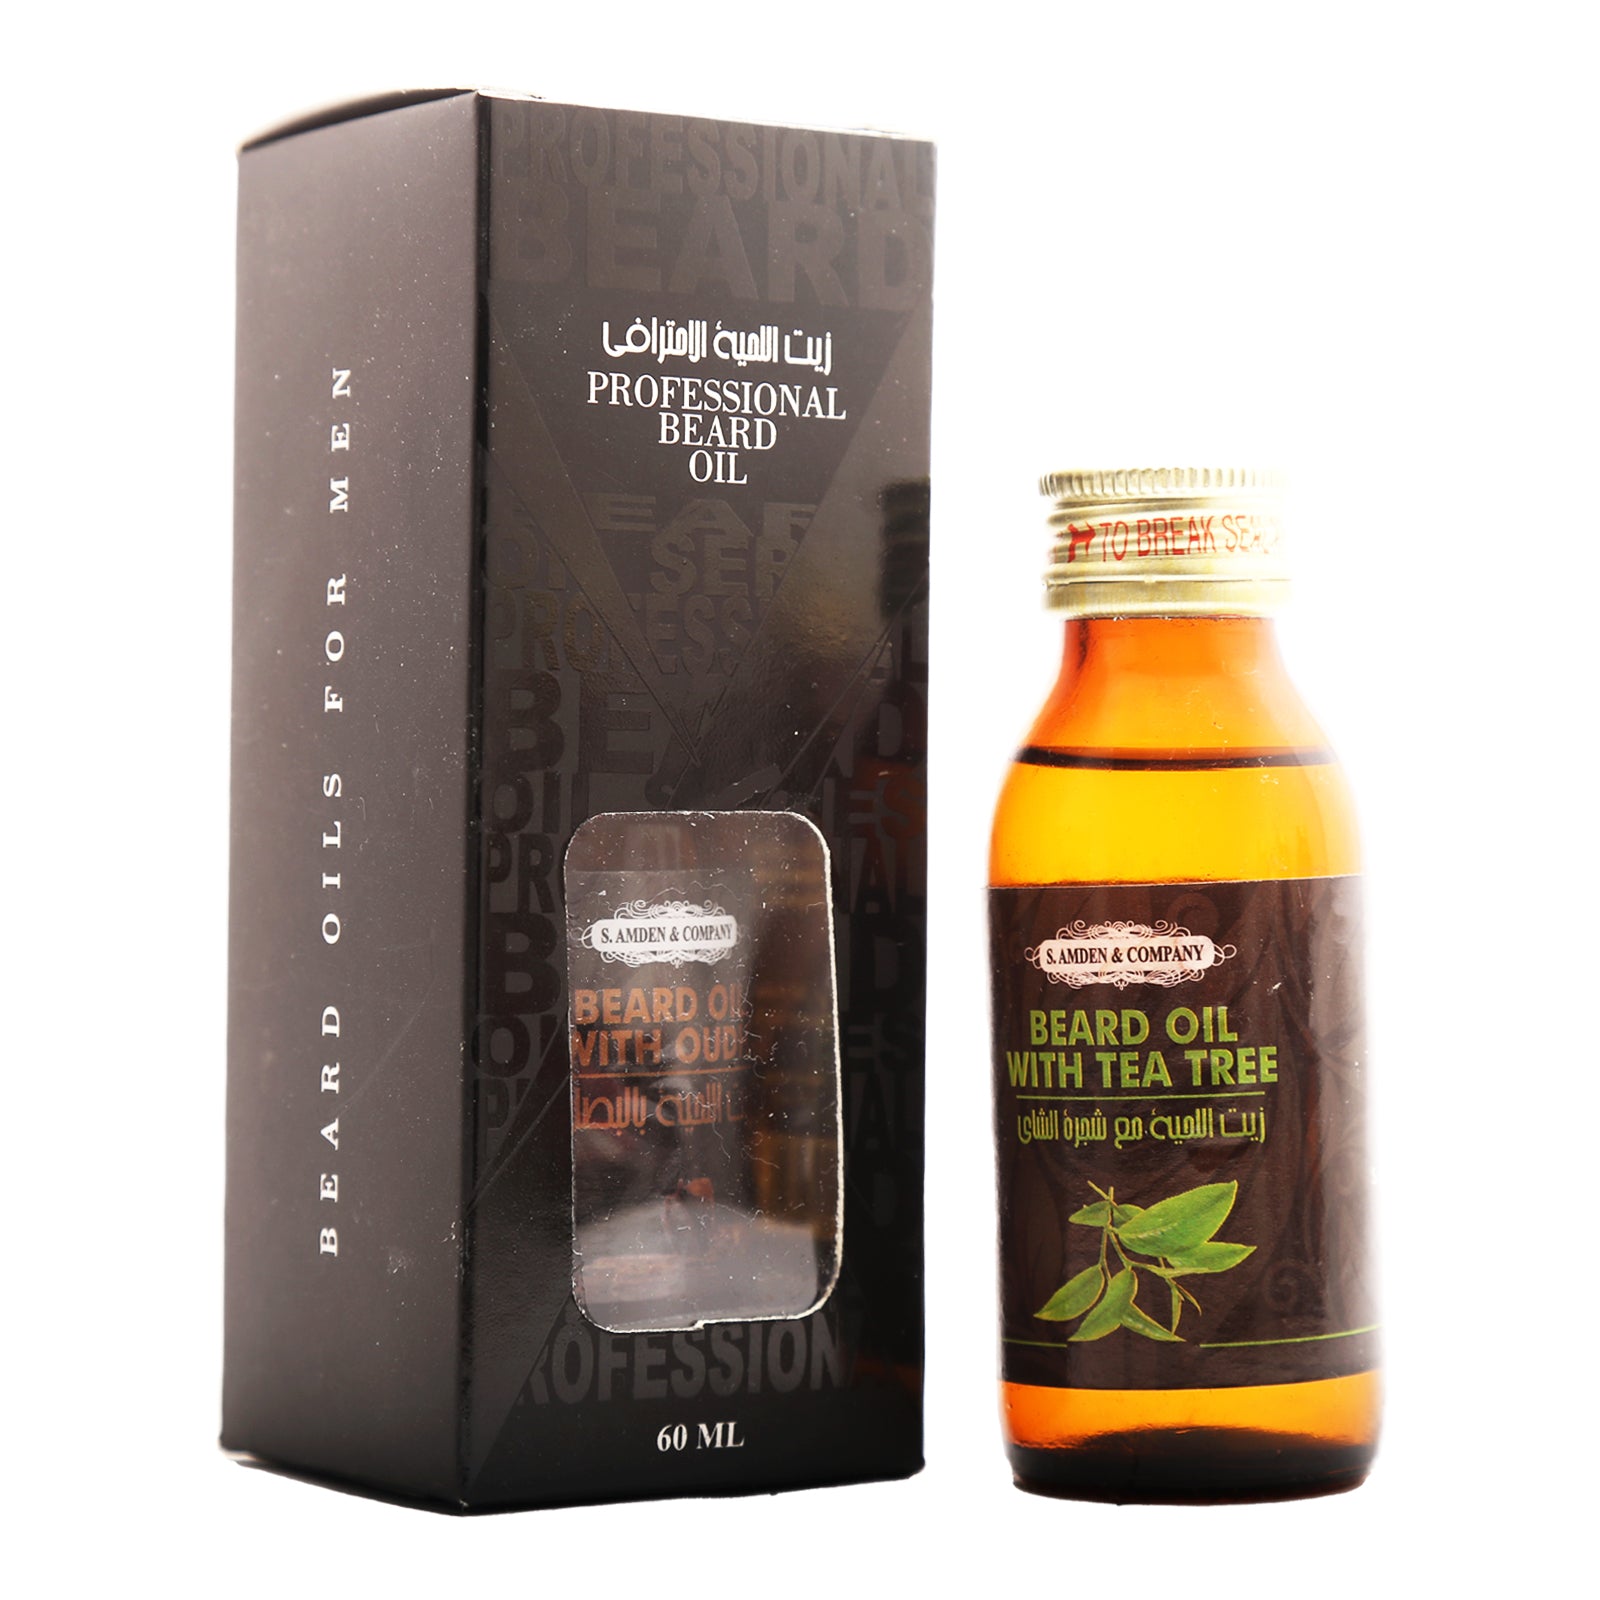 Beard Oil With Tea Tree Oil - 60ml - For Clean